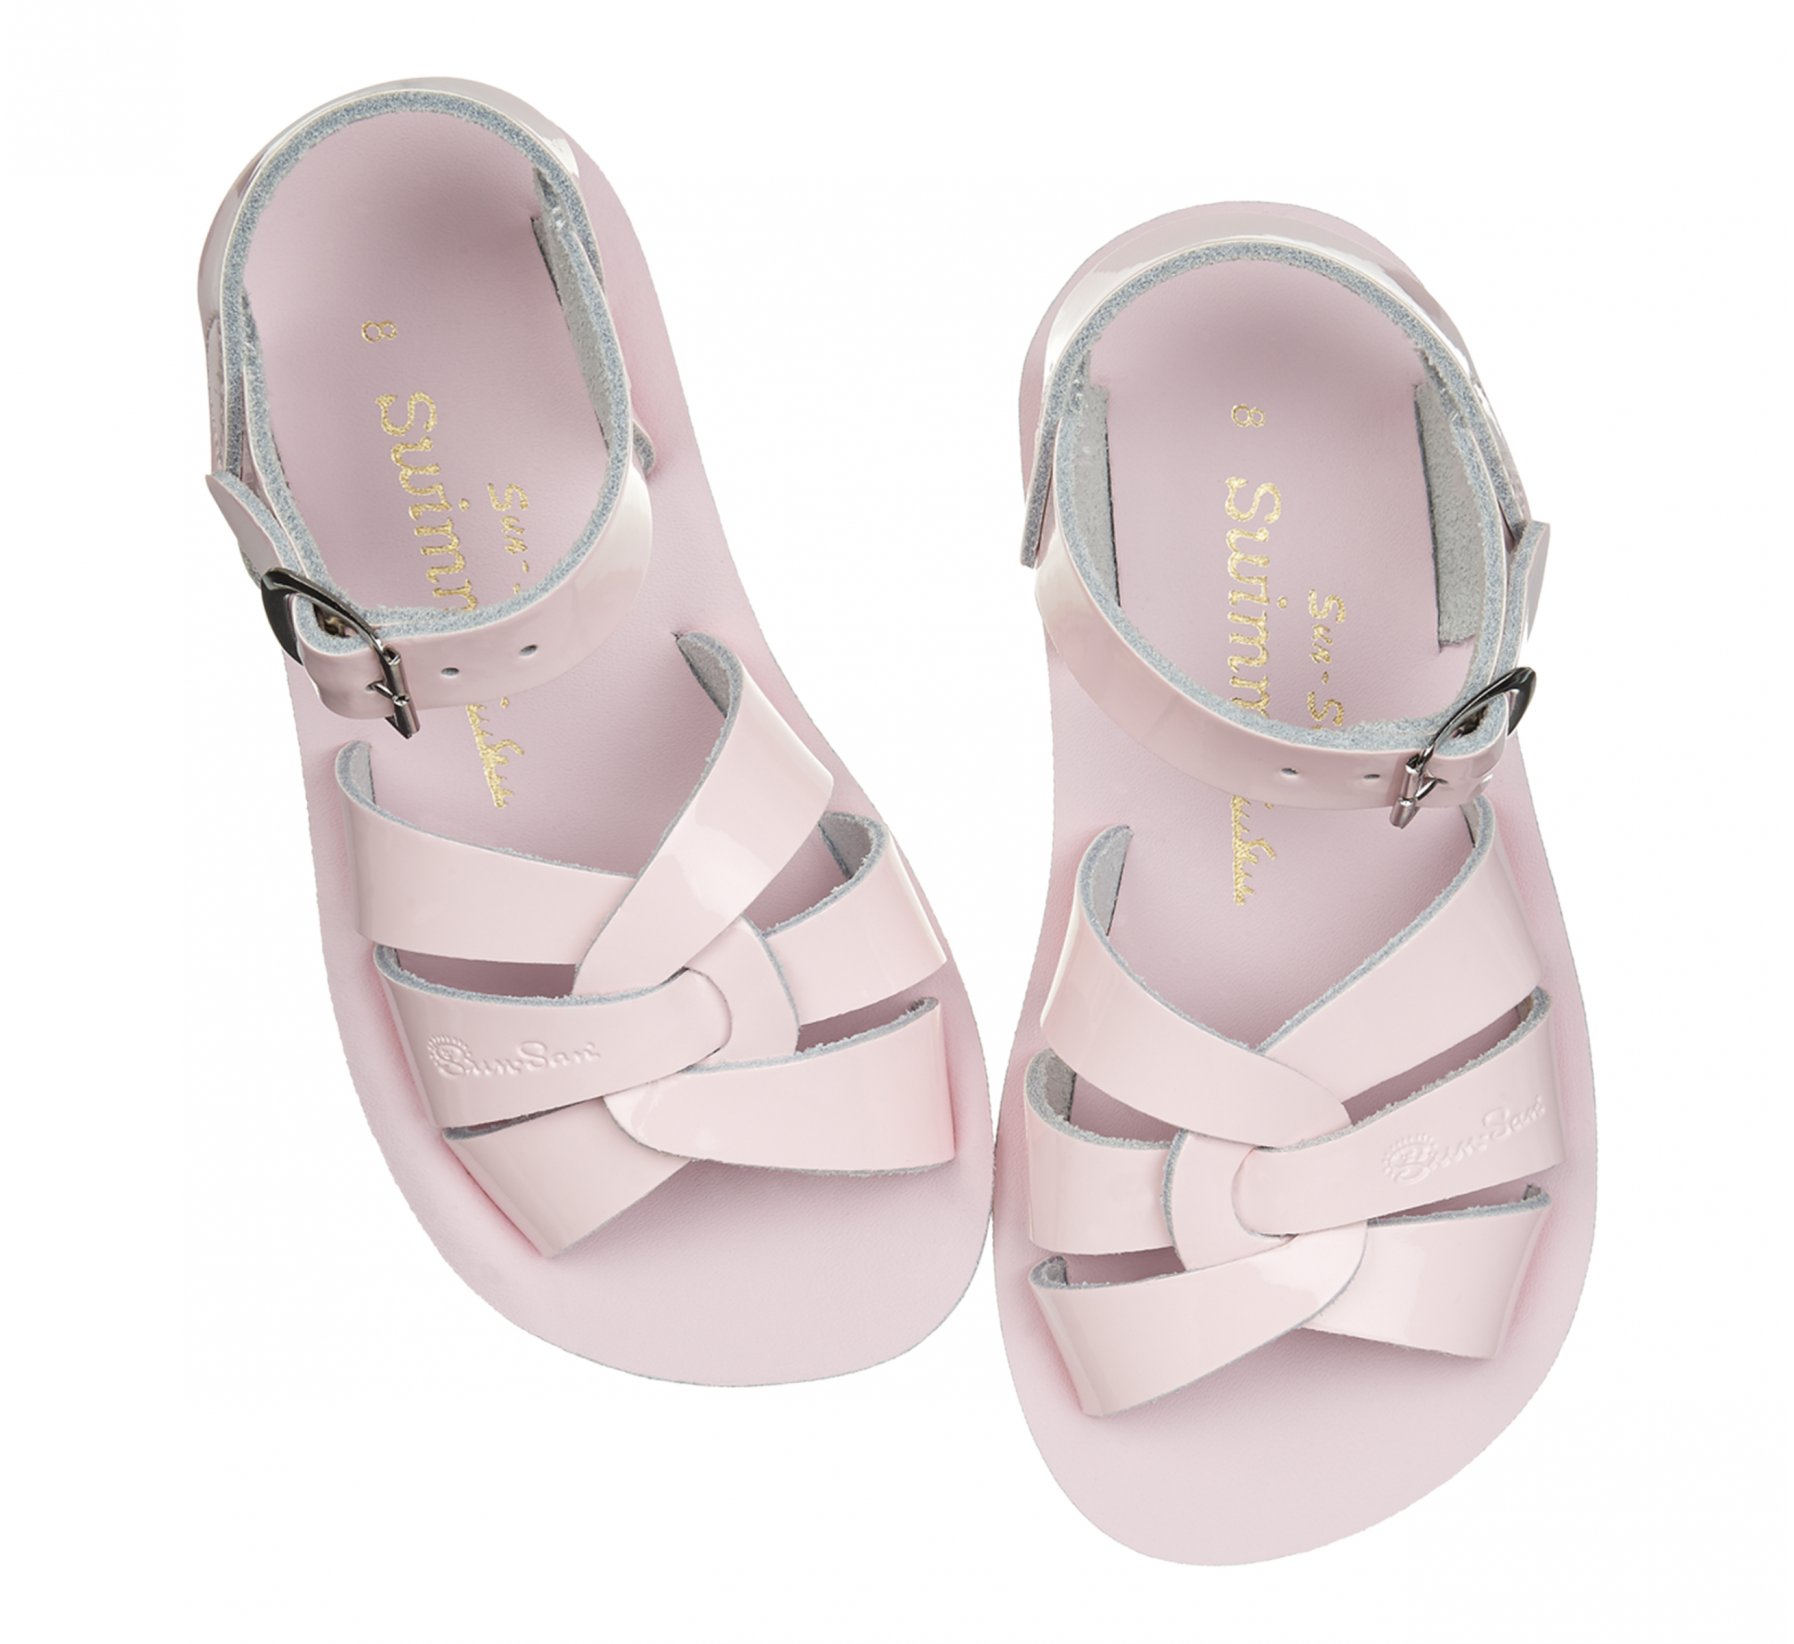 Swimmer Shiny Pink Kids Sandals - Salt-Water Sandals Shop